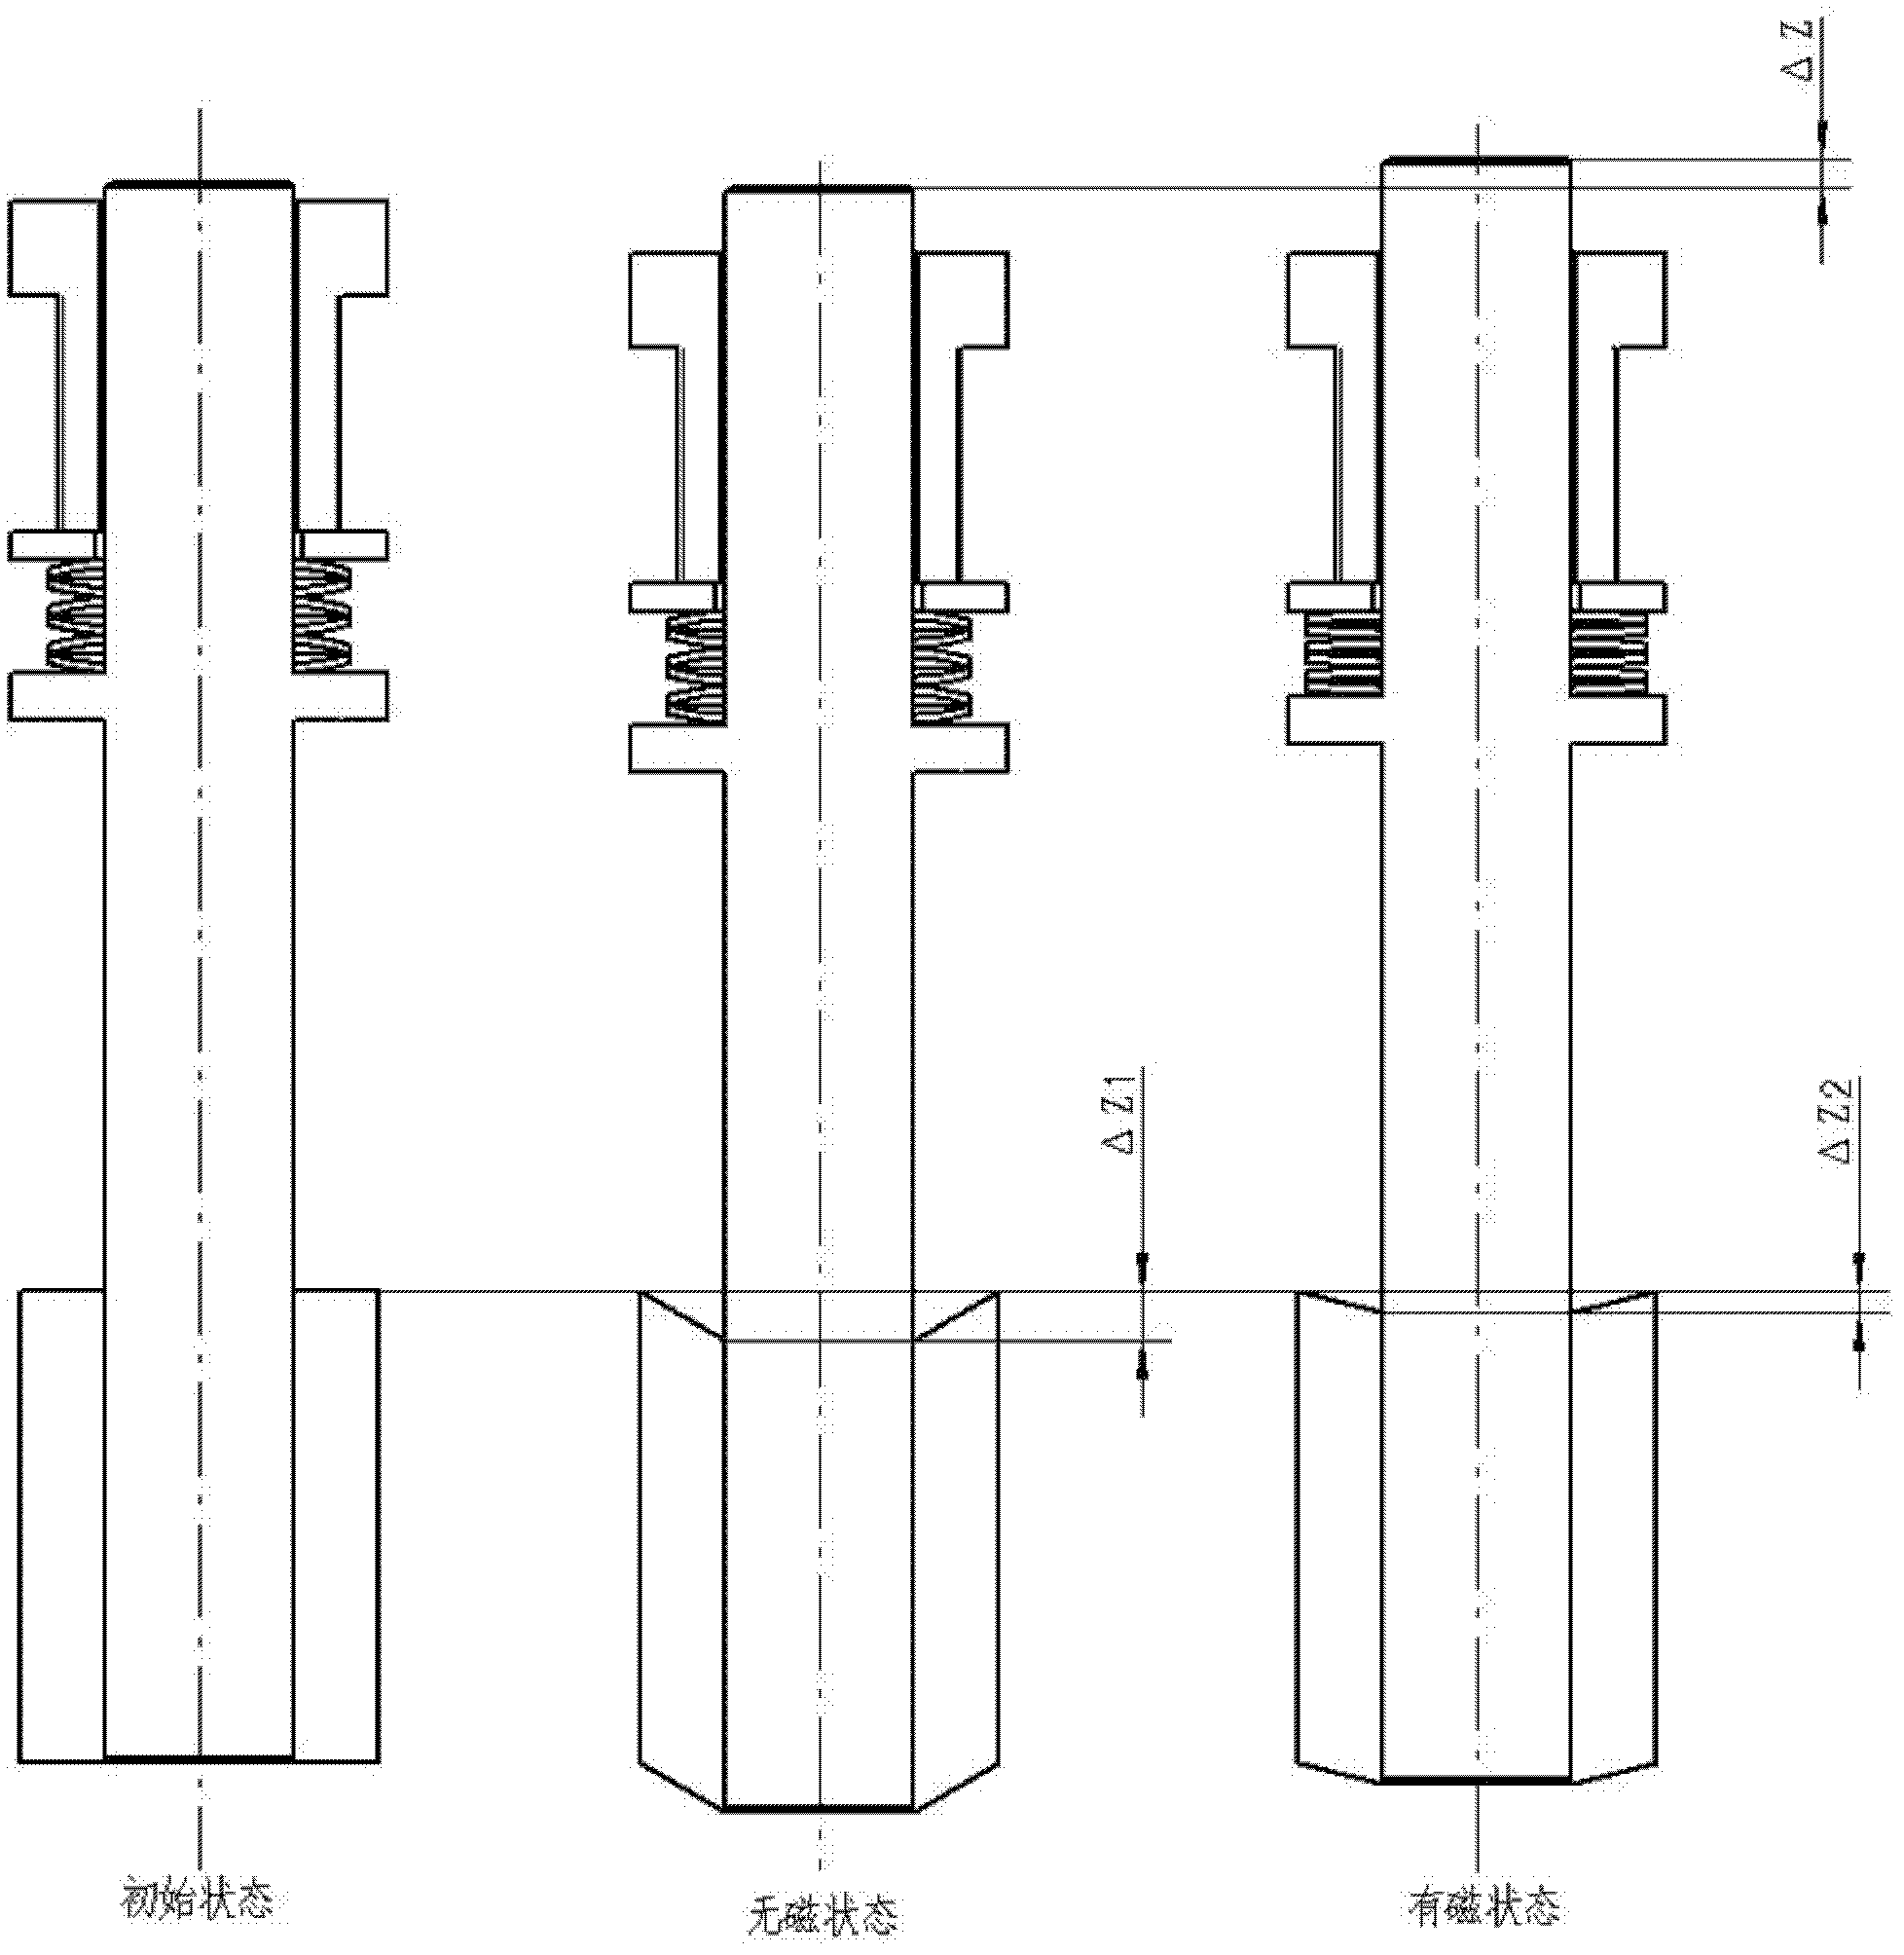 Micro-displacement actuator for shear mode magnetorheological elastomer